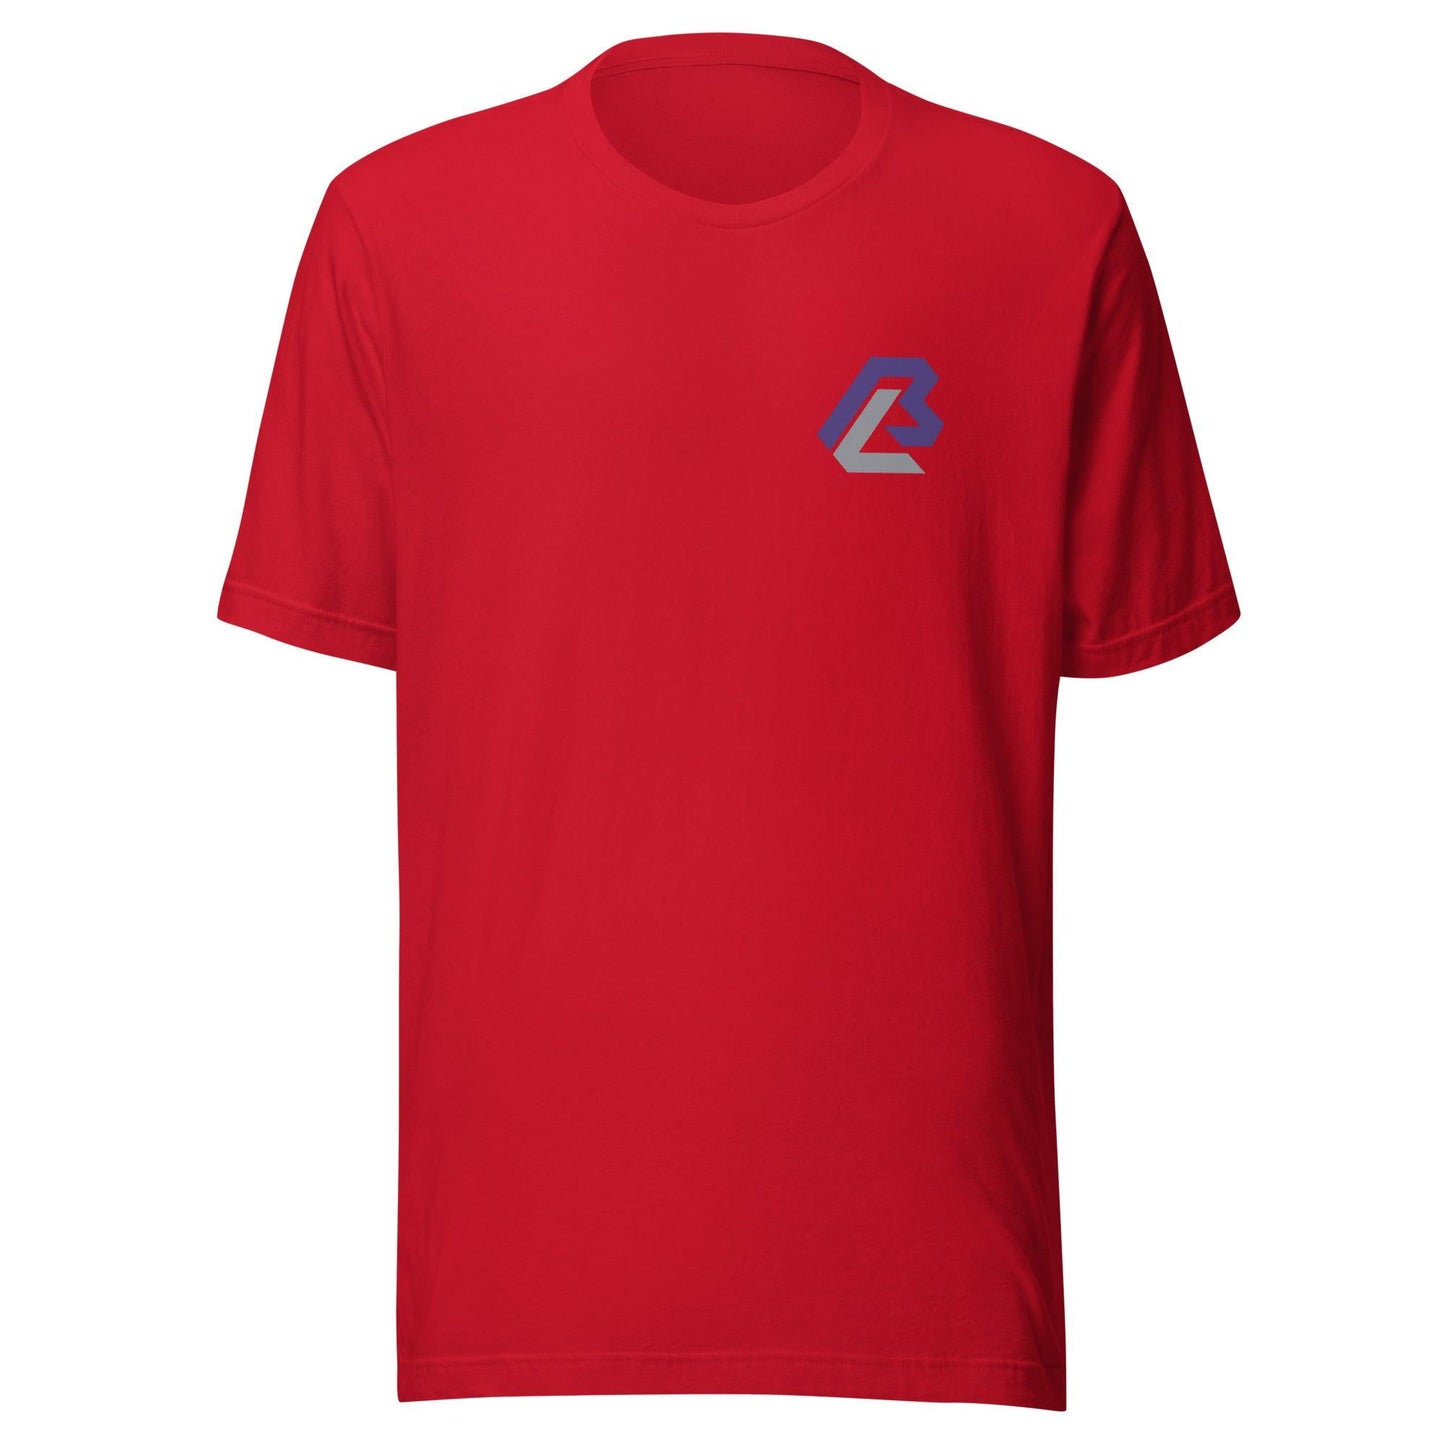 Bairon Ledesma "Essential" t-shirt - Fan Arch